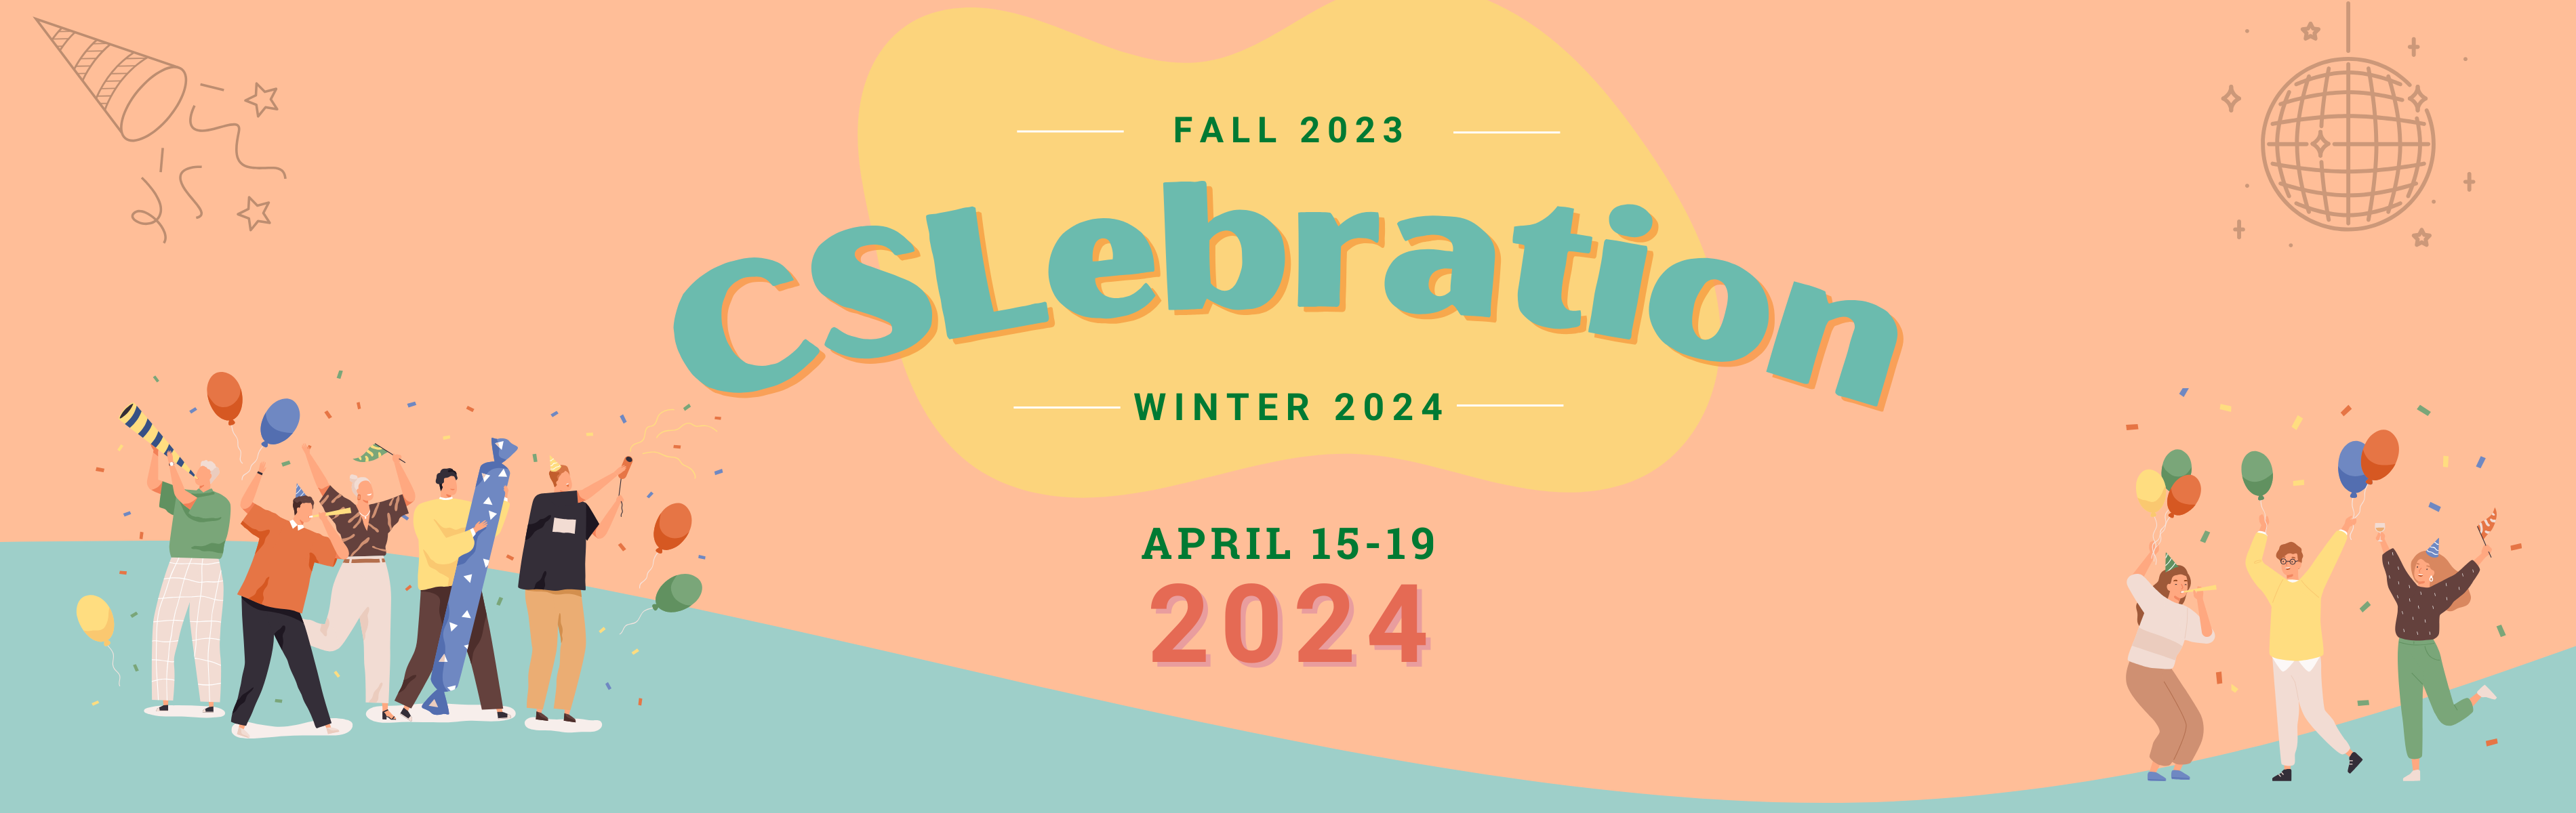 Fall 2023/Winter 2024 CSLebration: April 15-19